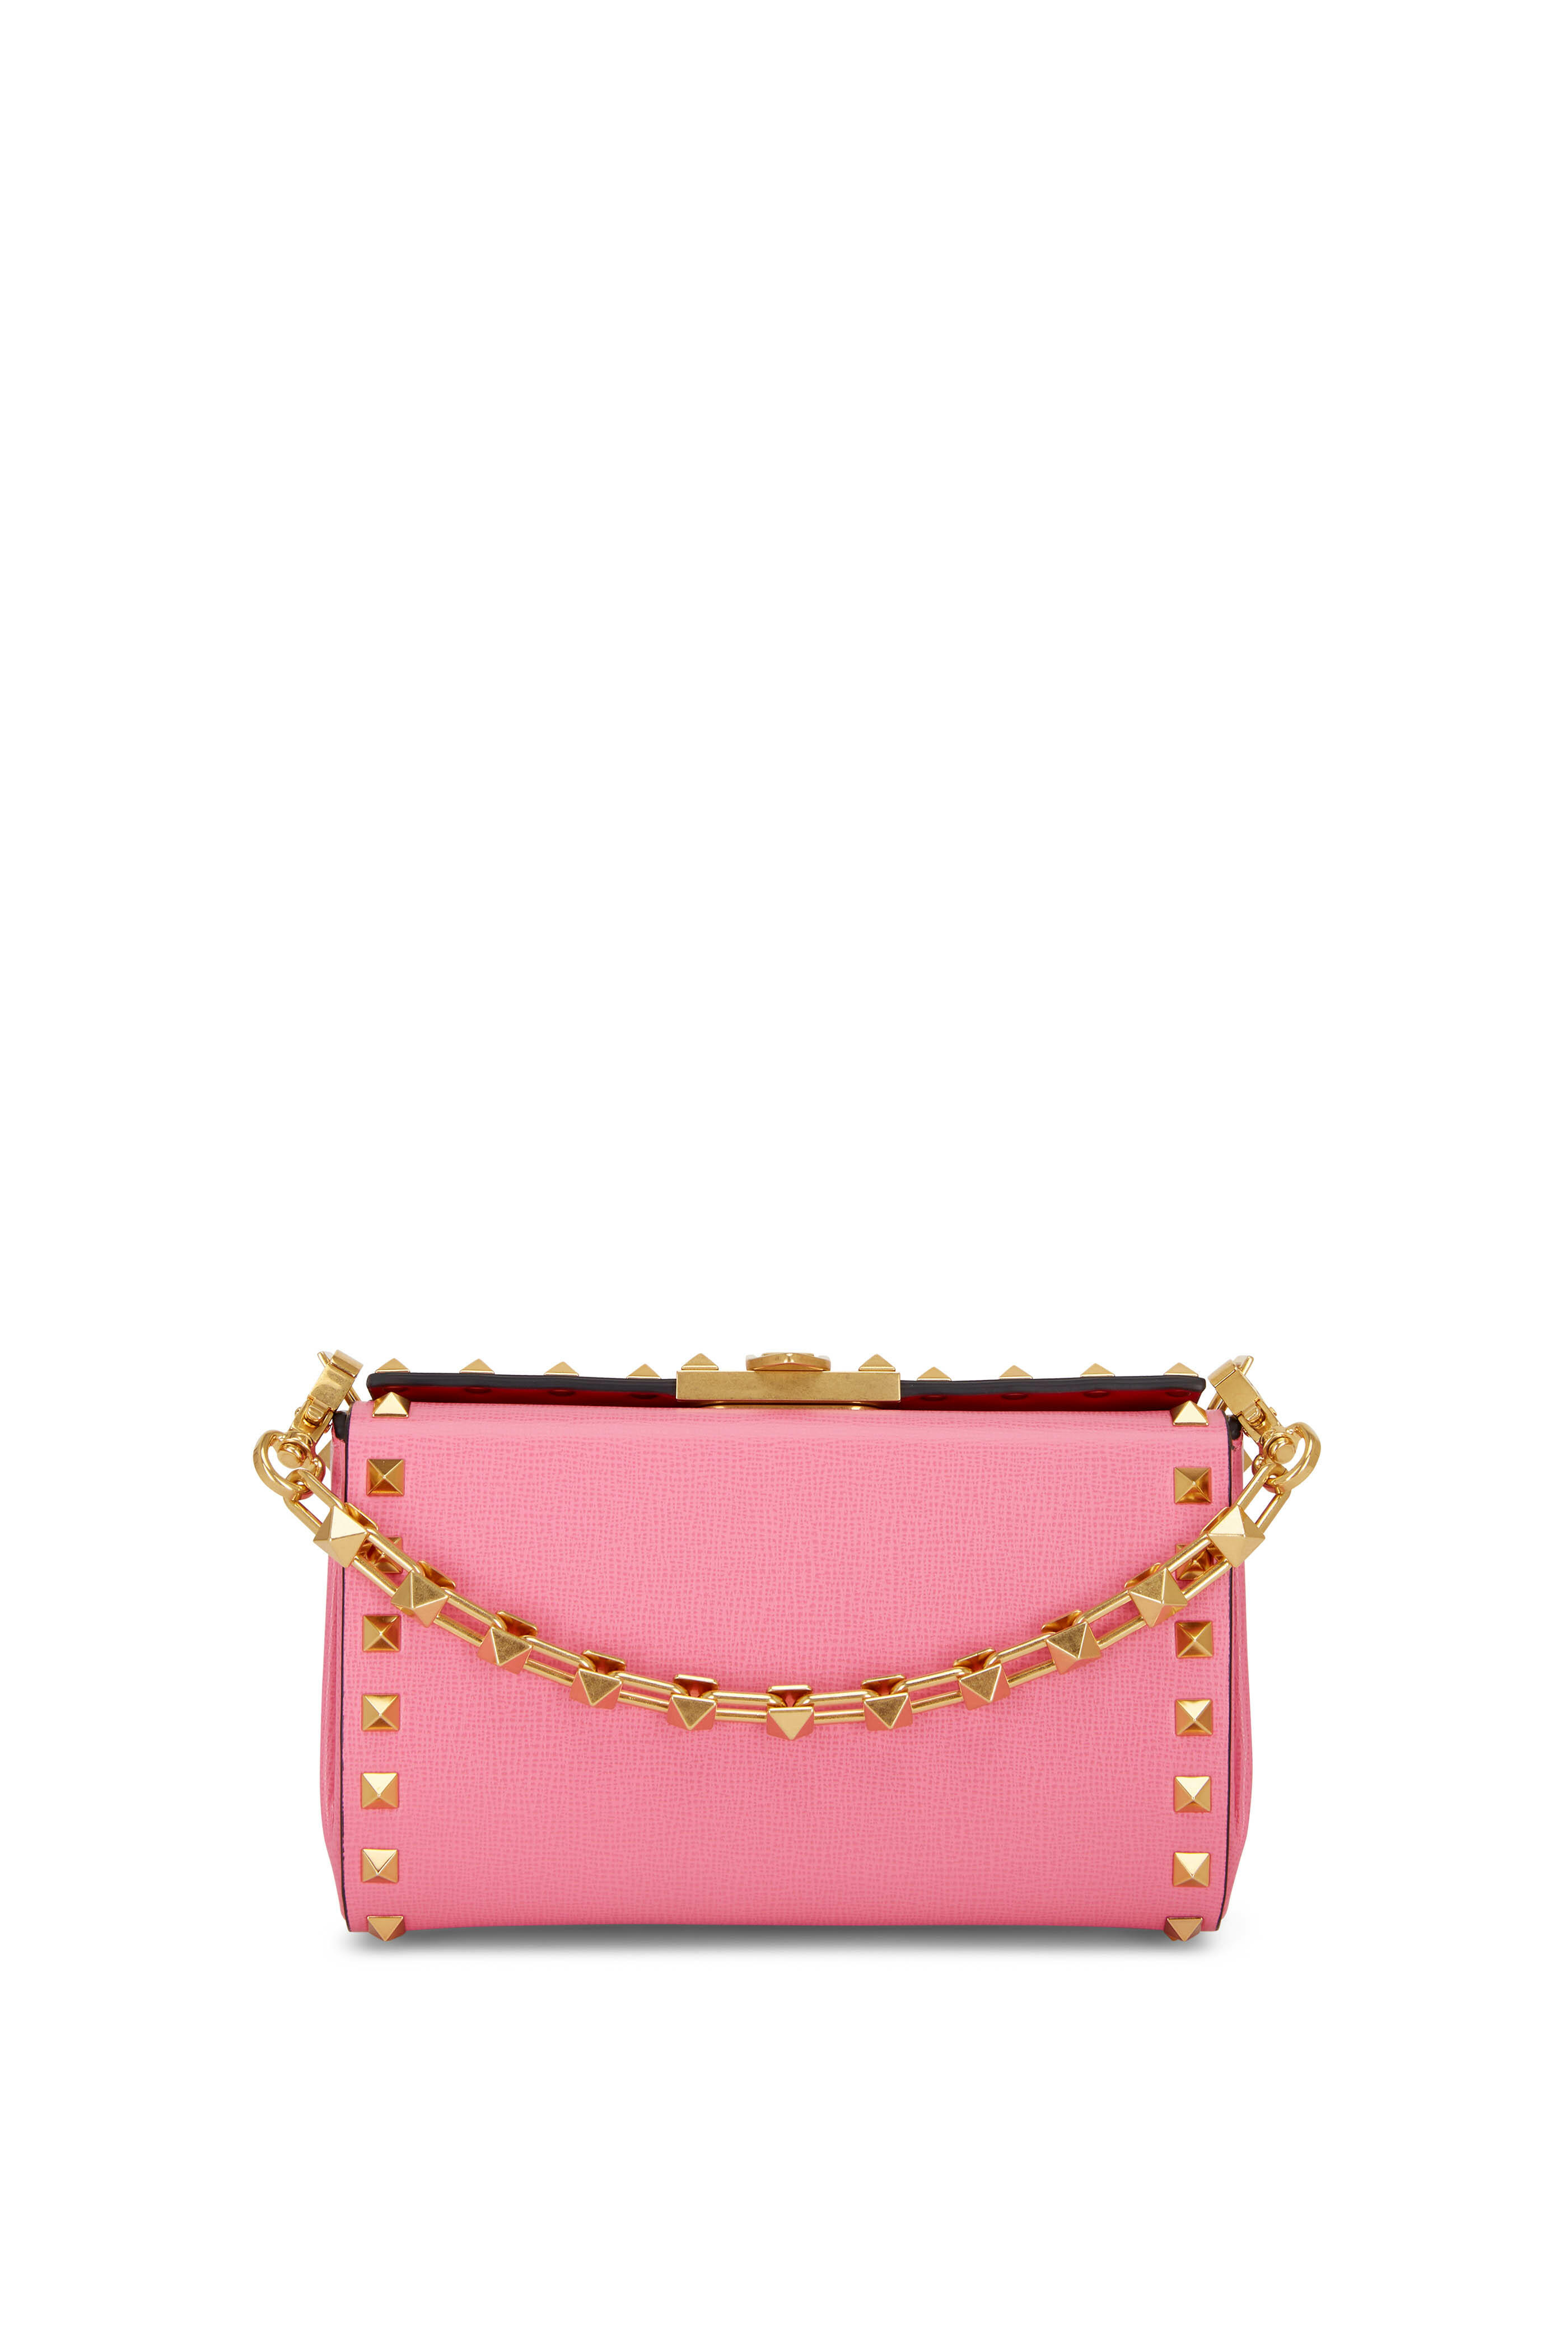 Valentino Garavani - Alcove Pink Leather Rockstud Box Bag